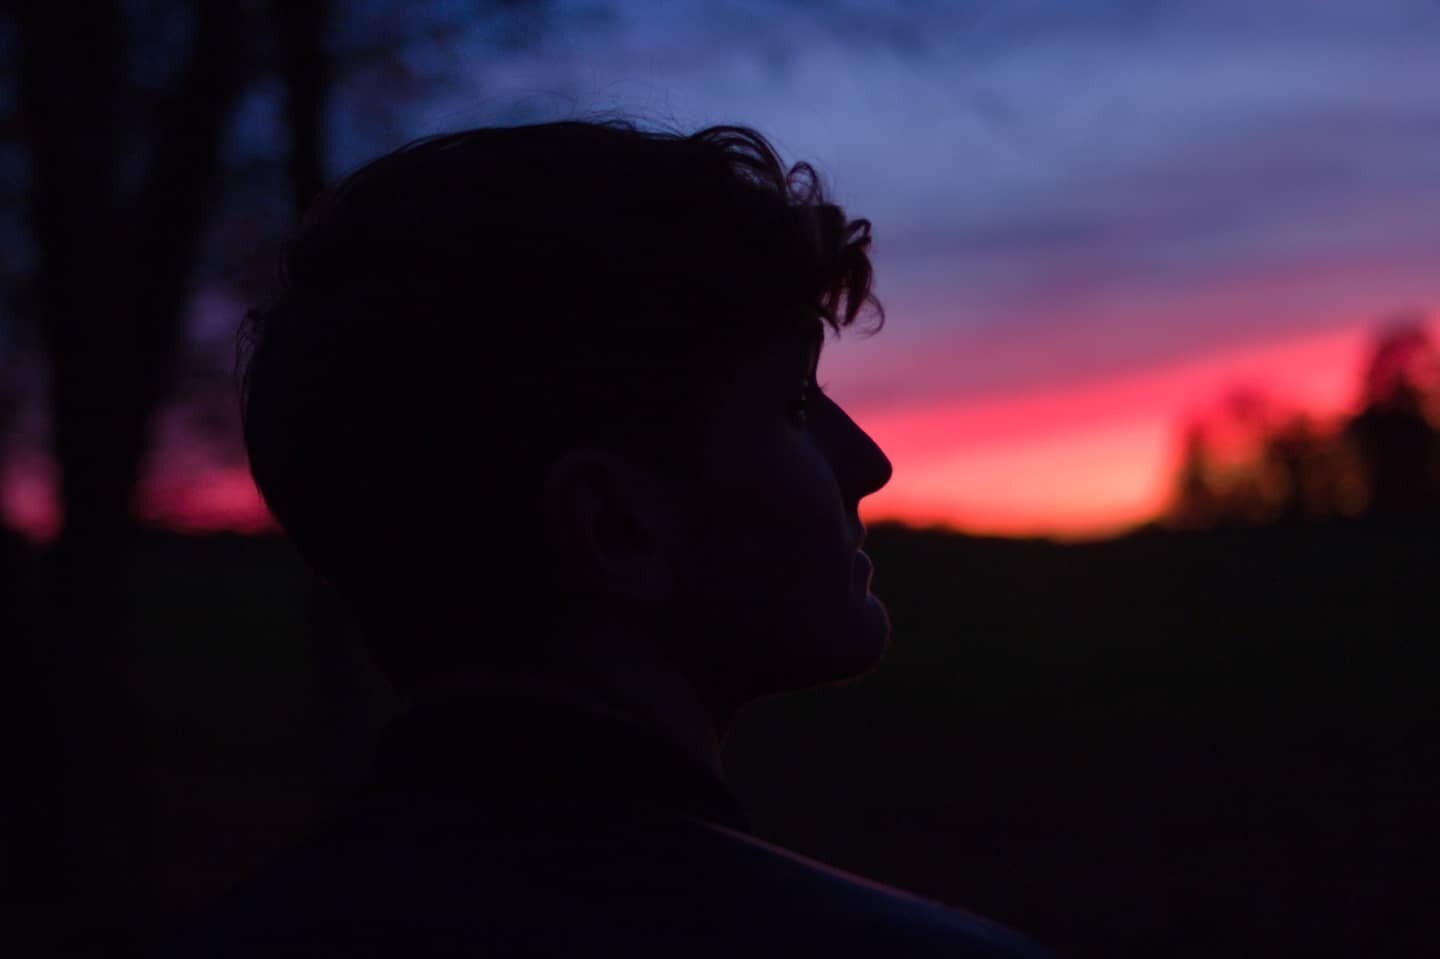 Daylight Savings Time? More like Double Sunset... Time. I don't know, I shouldn't be making seasonal jokes.

#Sunset #CTPhotographer #silhouette #GoldenHour #ExploreCT #ShotOnCanon #Portraitsinnature #EastCoastCreatives #EastCoastCaptured #Dusk #Sky